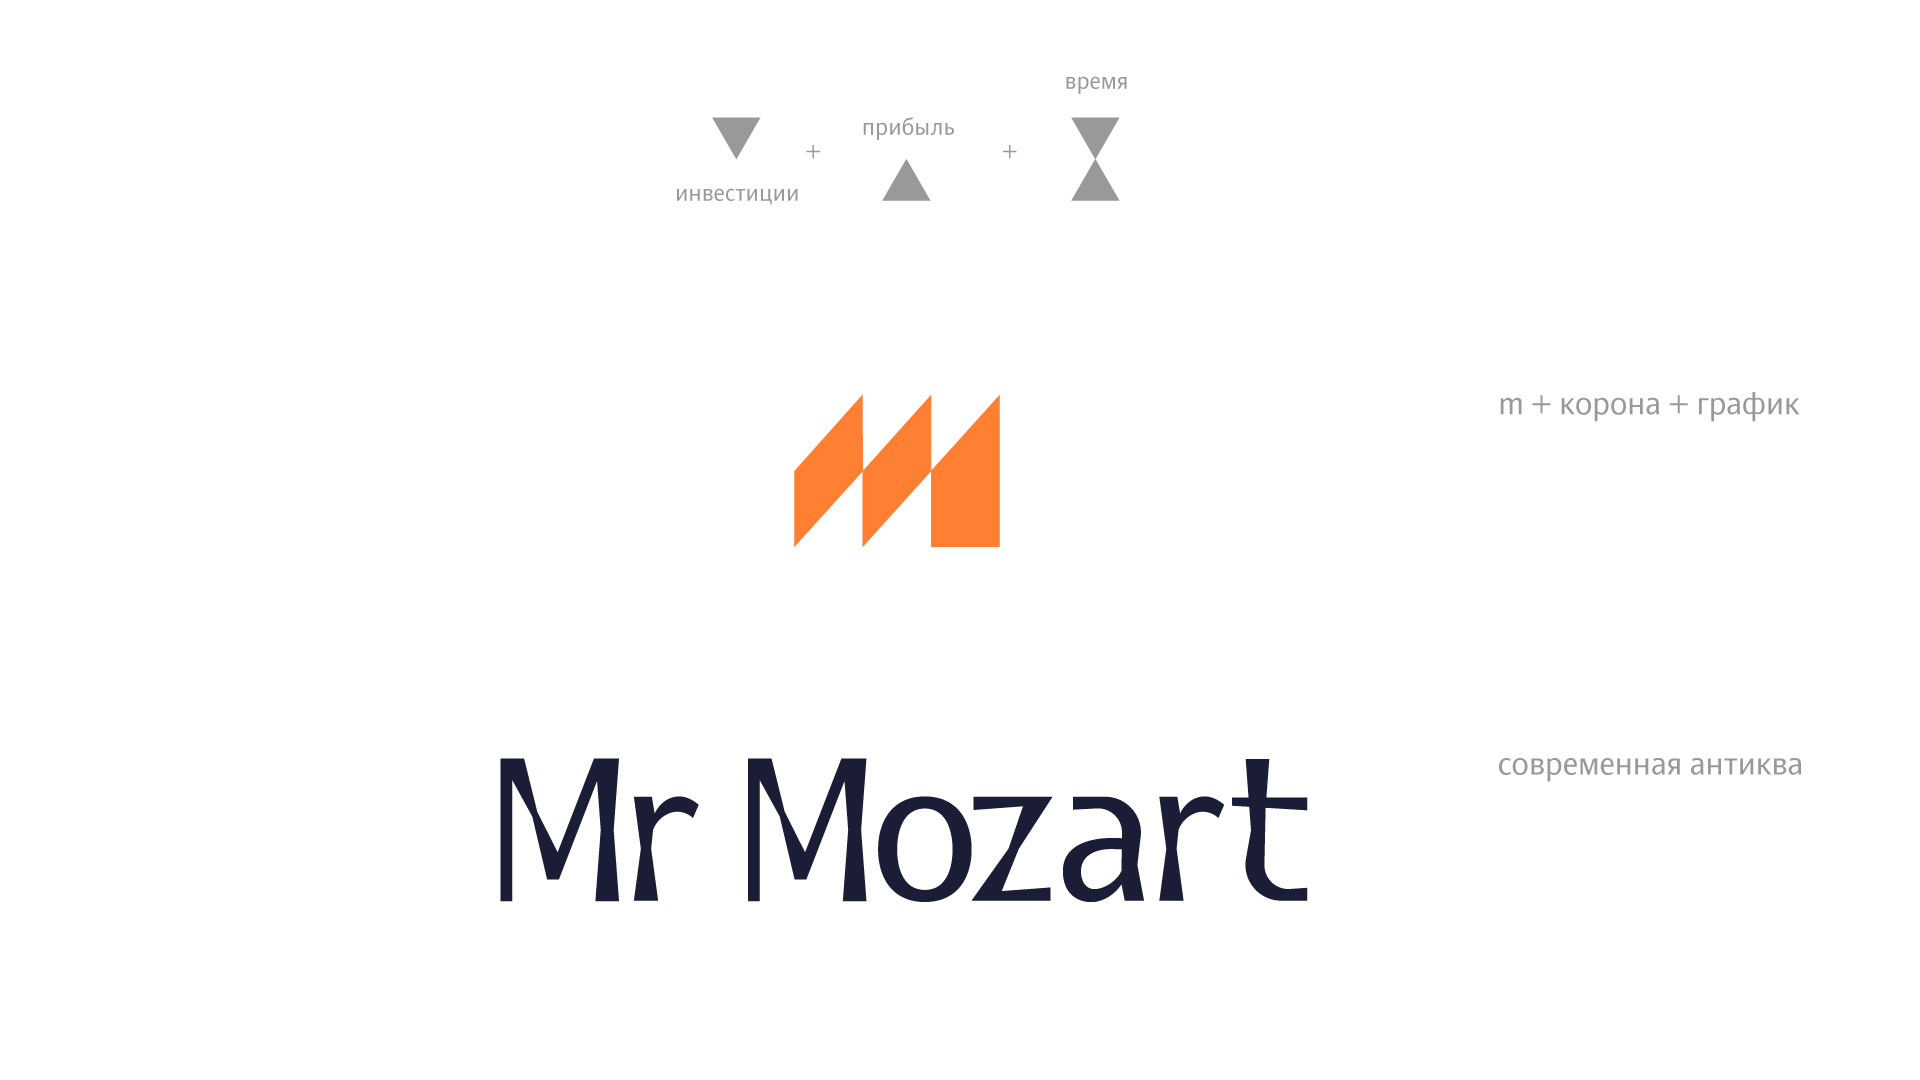 Mr mozart